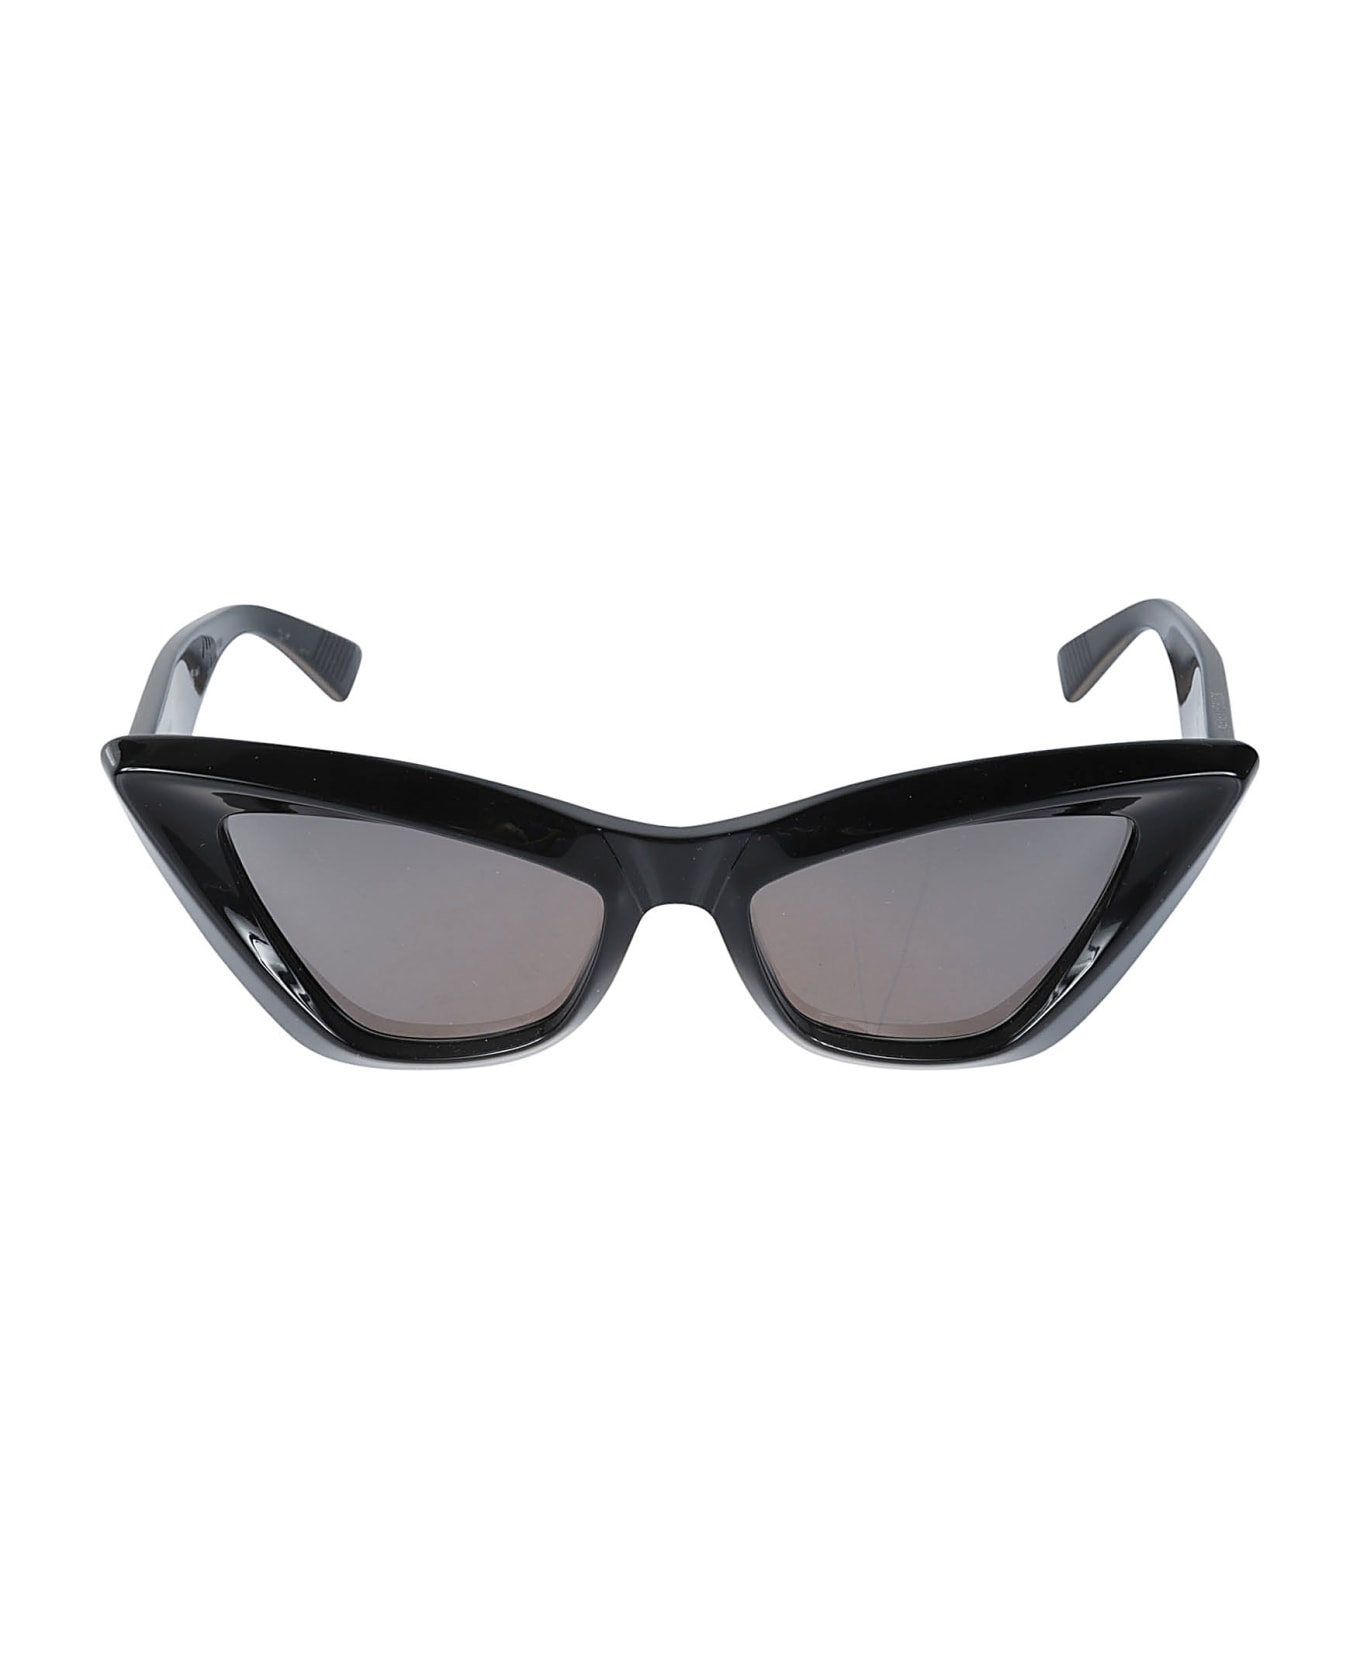 Bottega Veneta Eyewear Triangle Sunglasses - Black/Grey